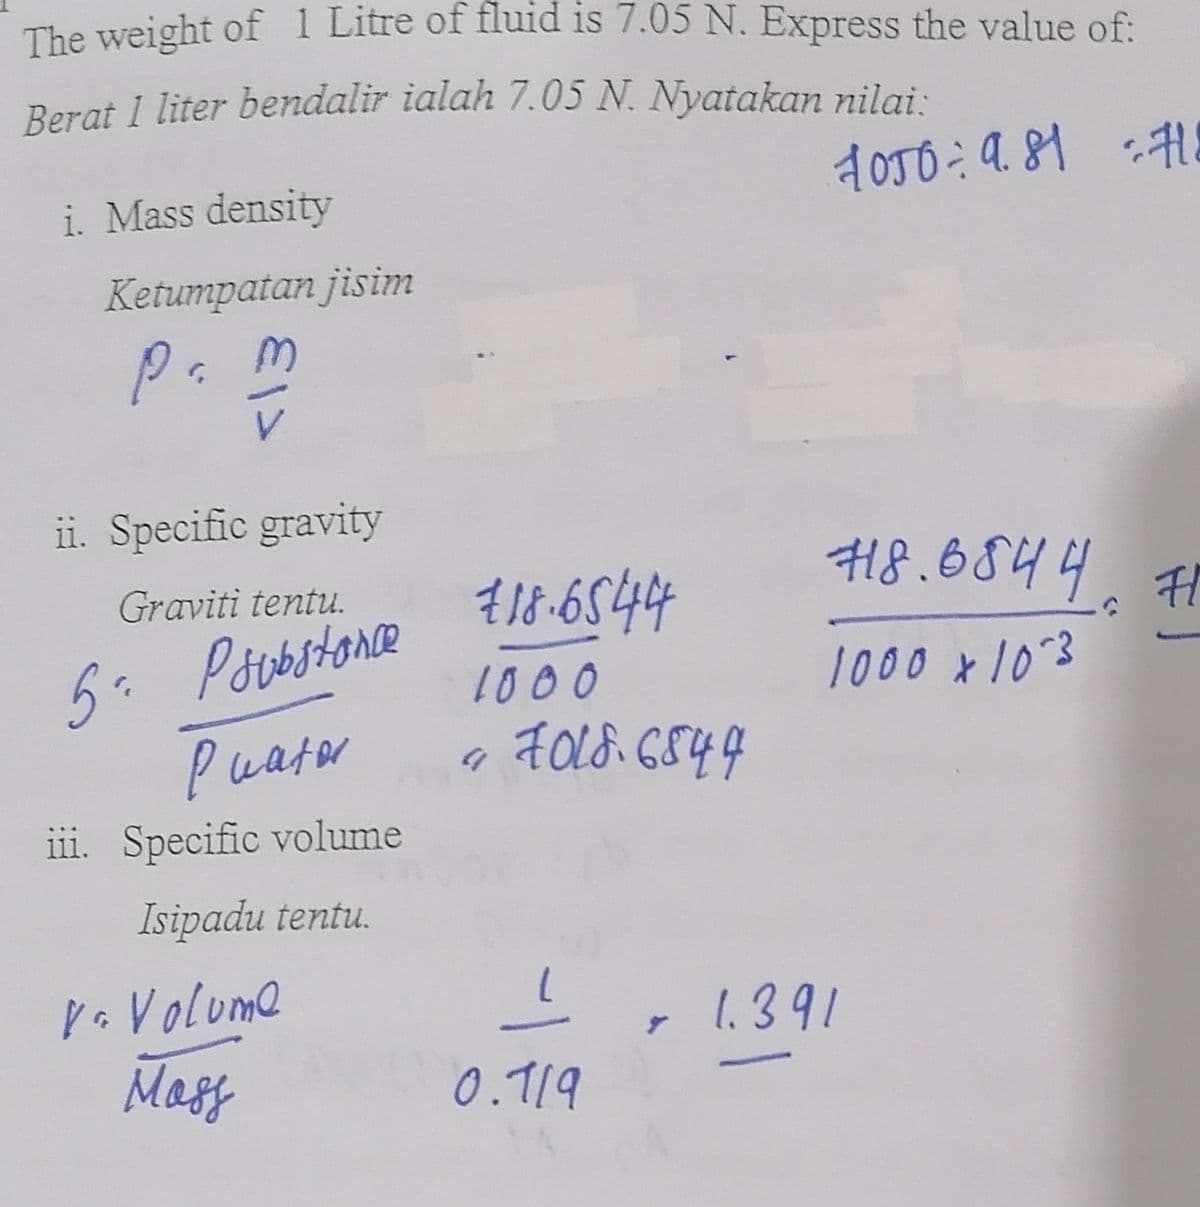 The weight of 1 Litre of fluid is 7.05 N. Express the value of:
Berat 1 liter bendalir ialah 7.05 N. Nyatakan nilai:
1050 9.81 71
=
i. Mass density
Ketumpatan jisim
pam
ii. Specific gravity
Graviti tentu.
5²
Psubstance
Puator
iii. Specific volume
Isipadu tentu.
Vo Volume
Mass
€18.6544
1000
« 2018.6844
9
0.119
718.6844 #1
귀
1000 * 10°3
- 1.391